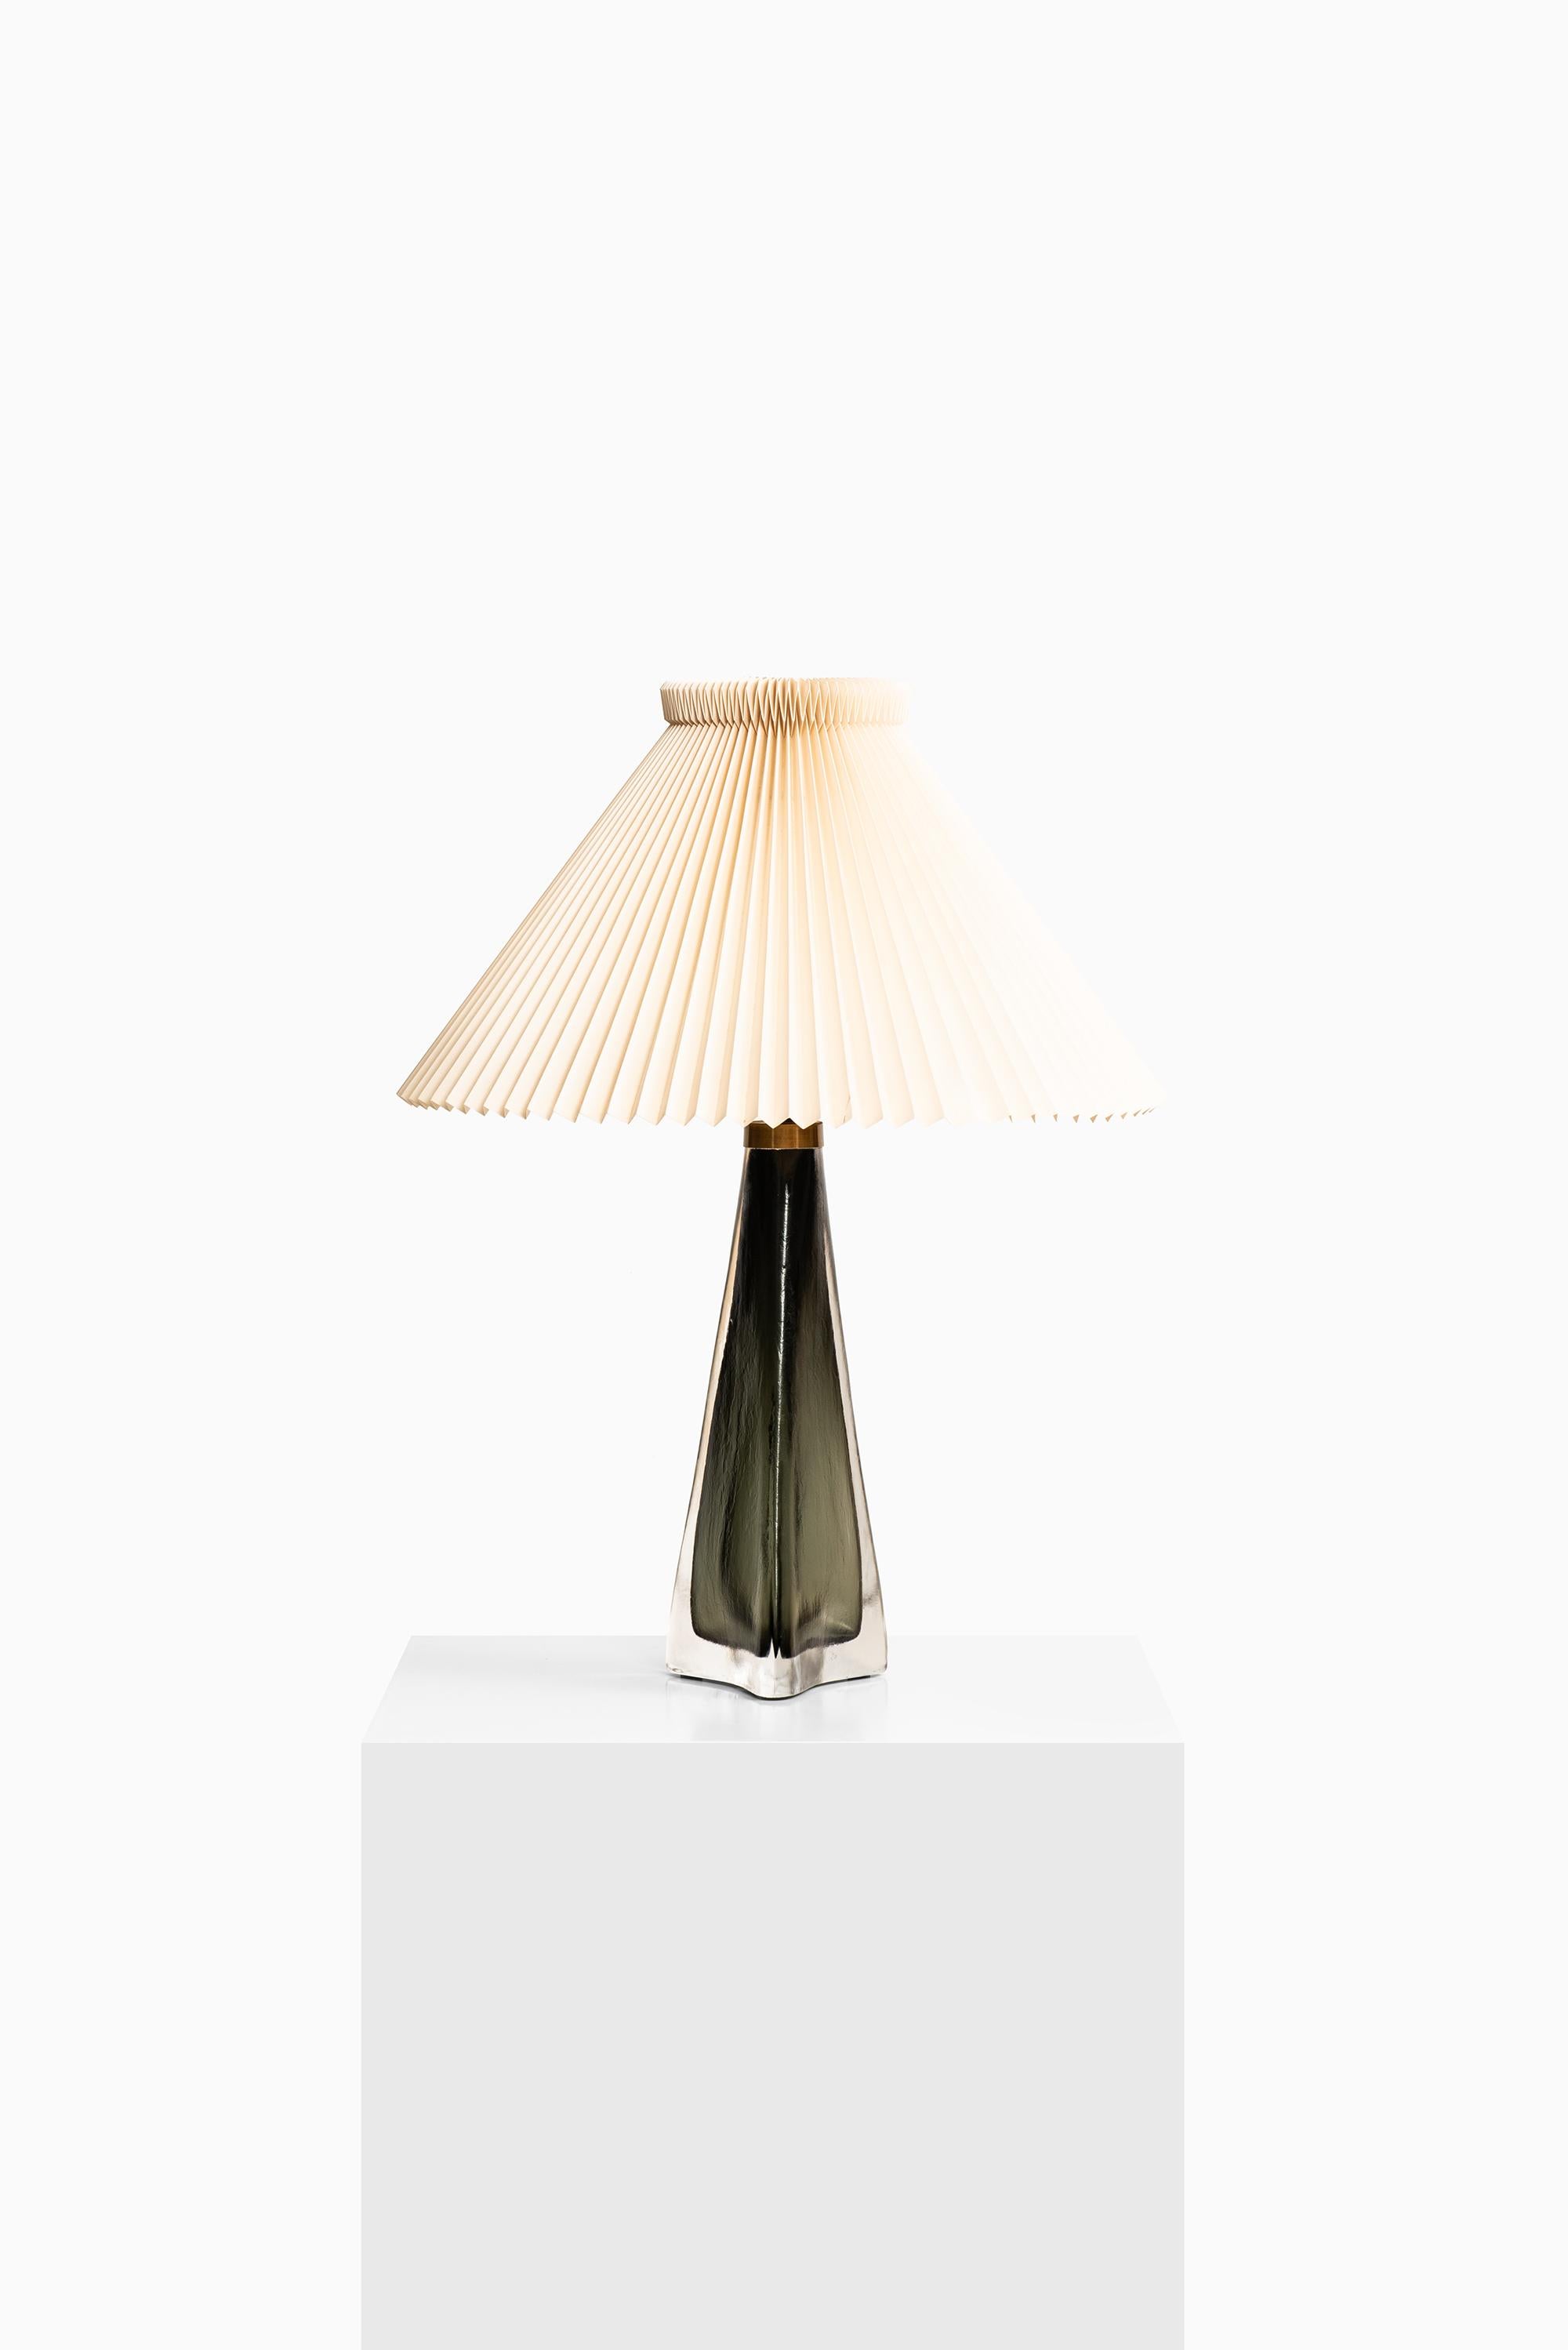 Scandinavian Modern Carl Fagerlund Table Lamps Model RD1319 by Orrefors in Sweden